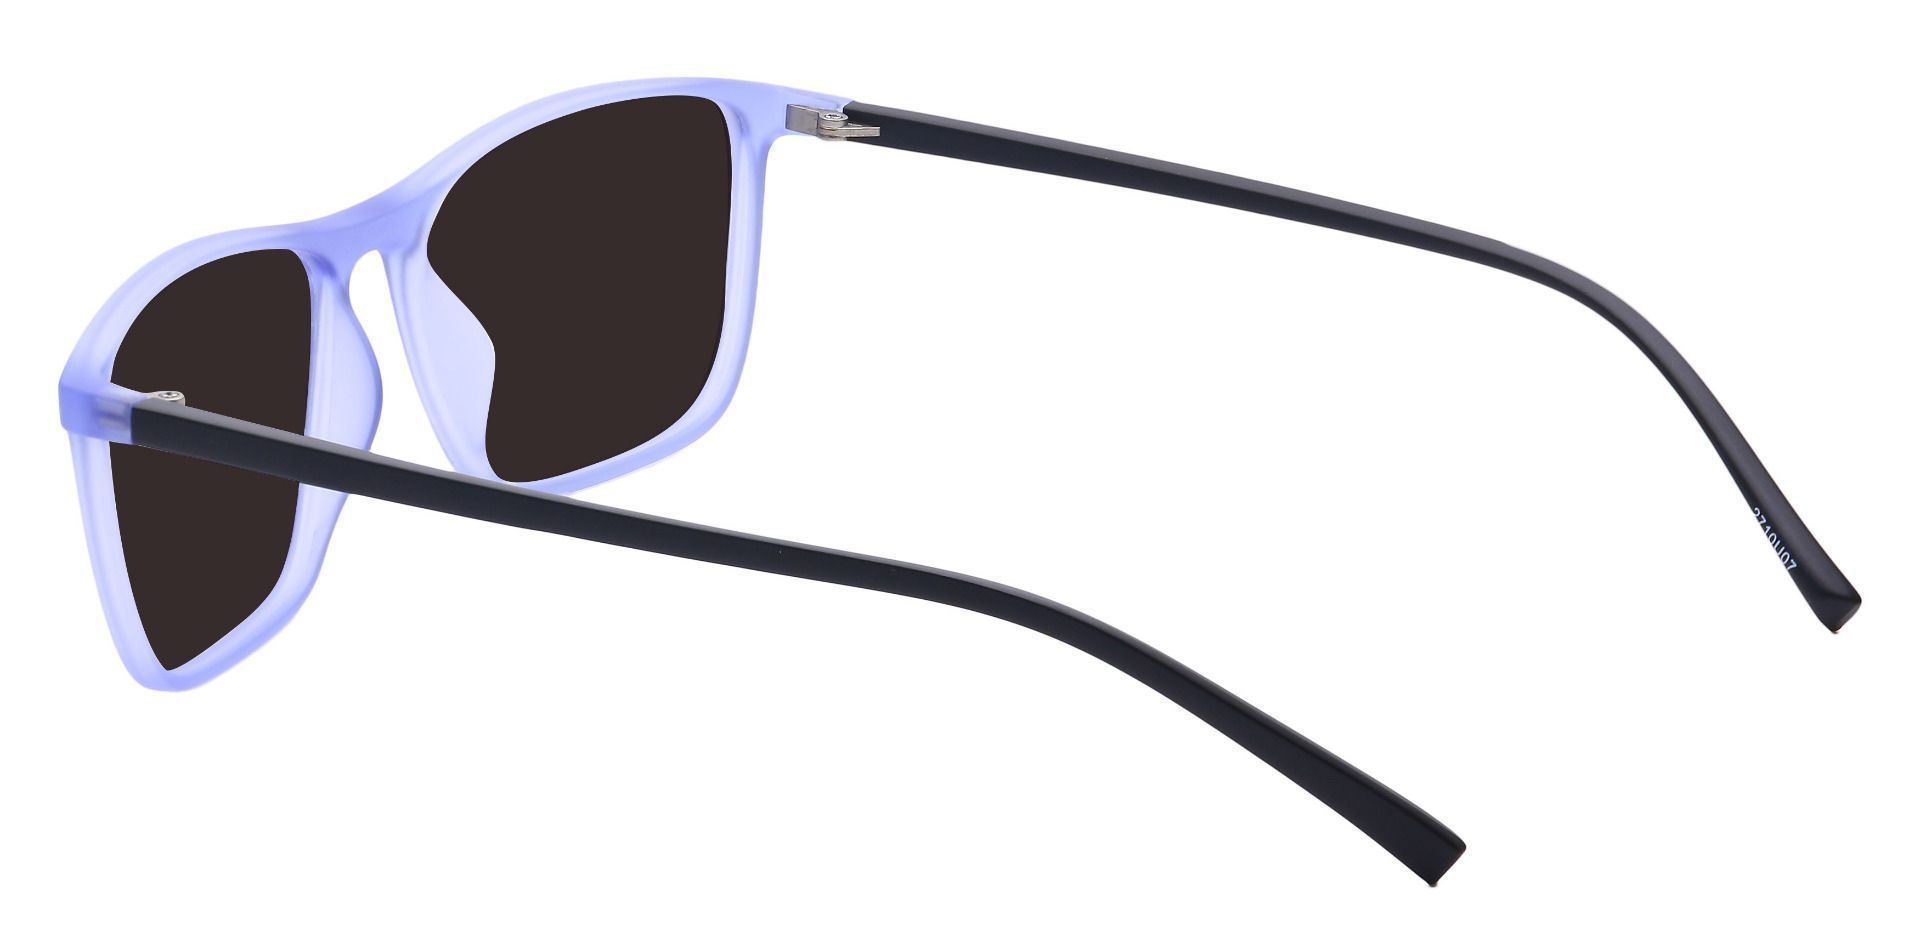 Candid Rectangle Prescription Sunglasses - Blue Frame With Gray Lenses